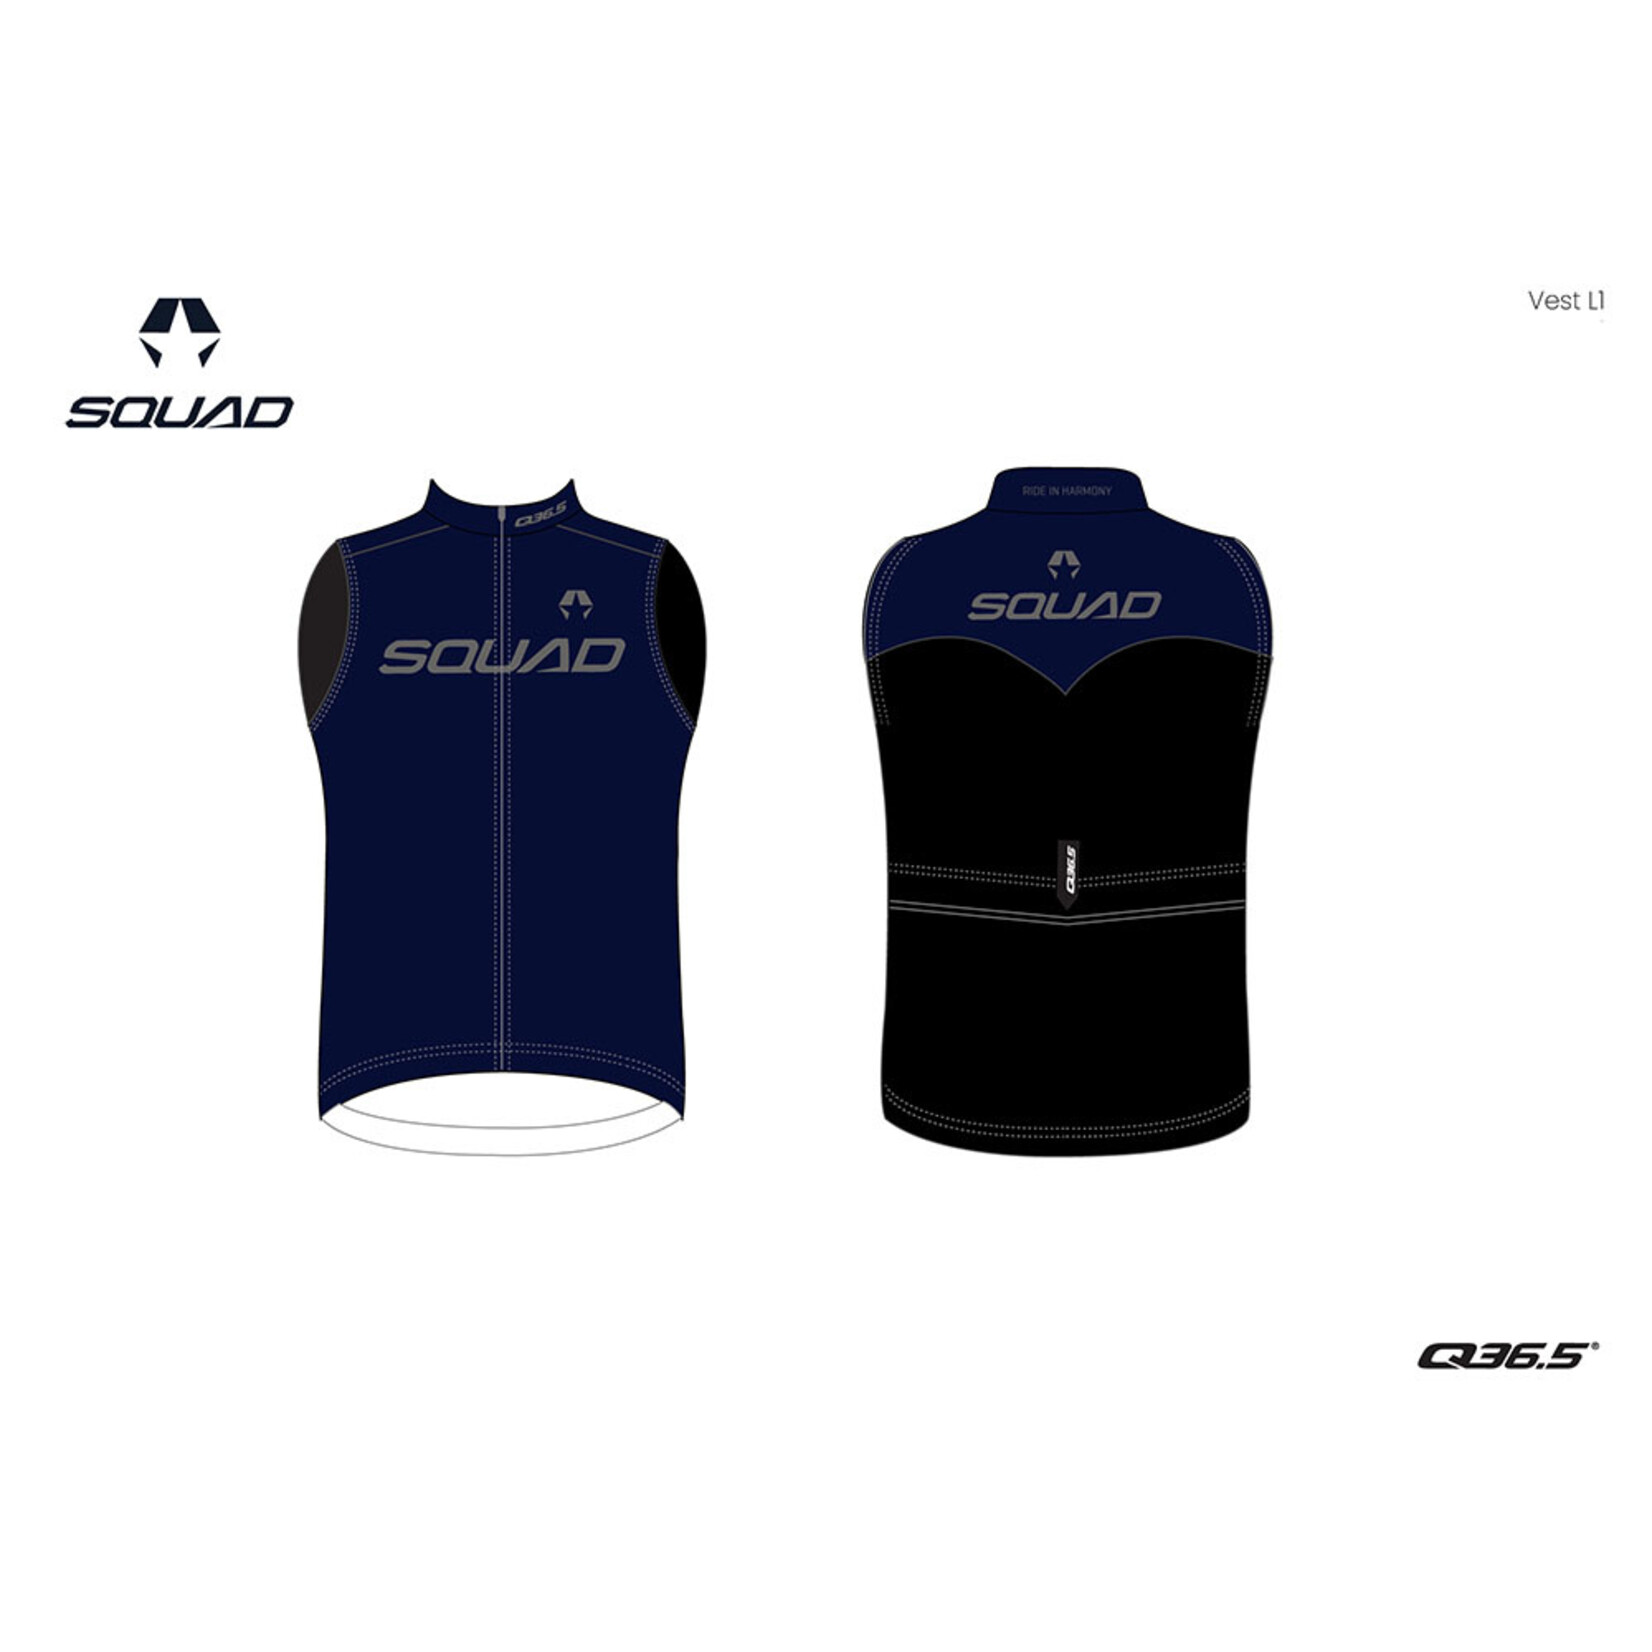 Q36.5 Pro Cycling Team Vest by Q36-5